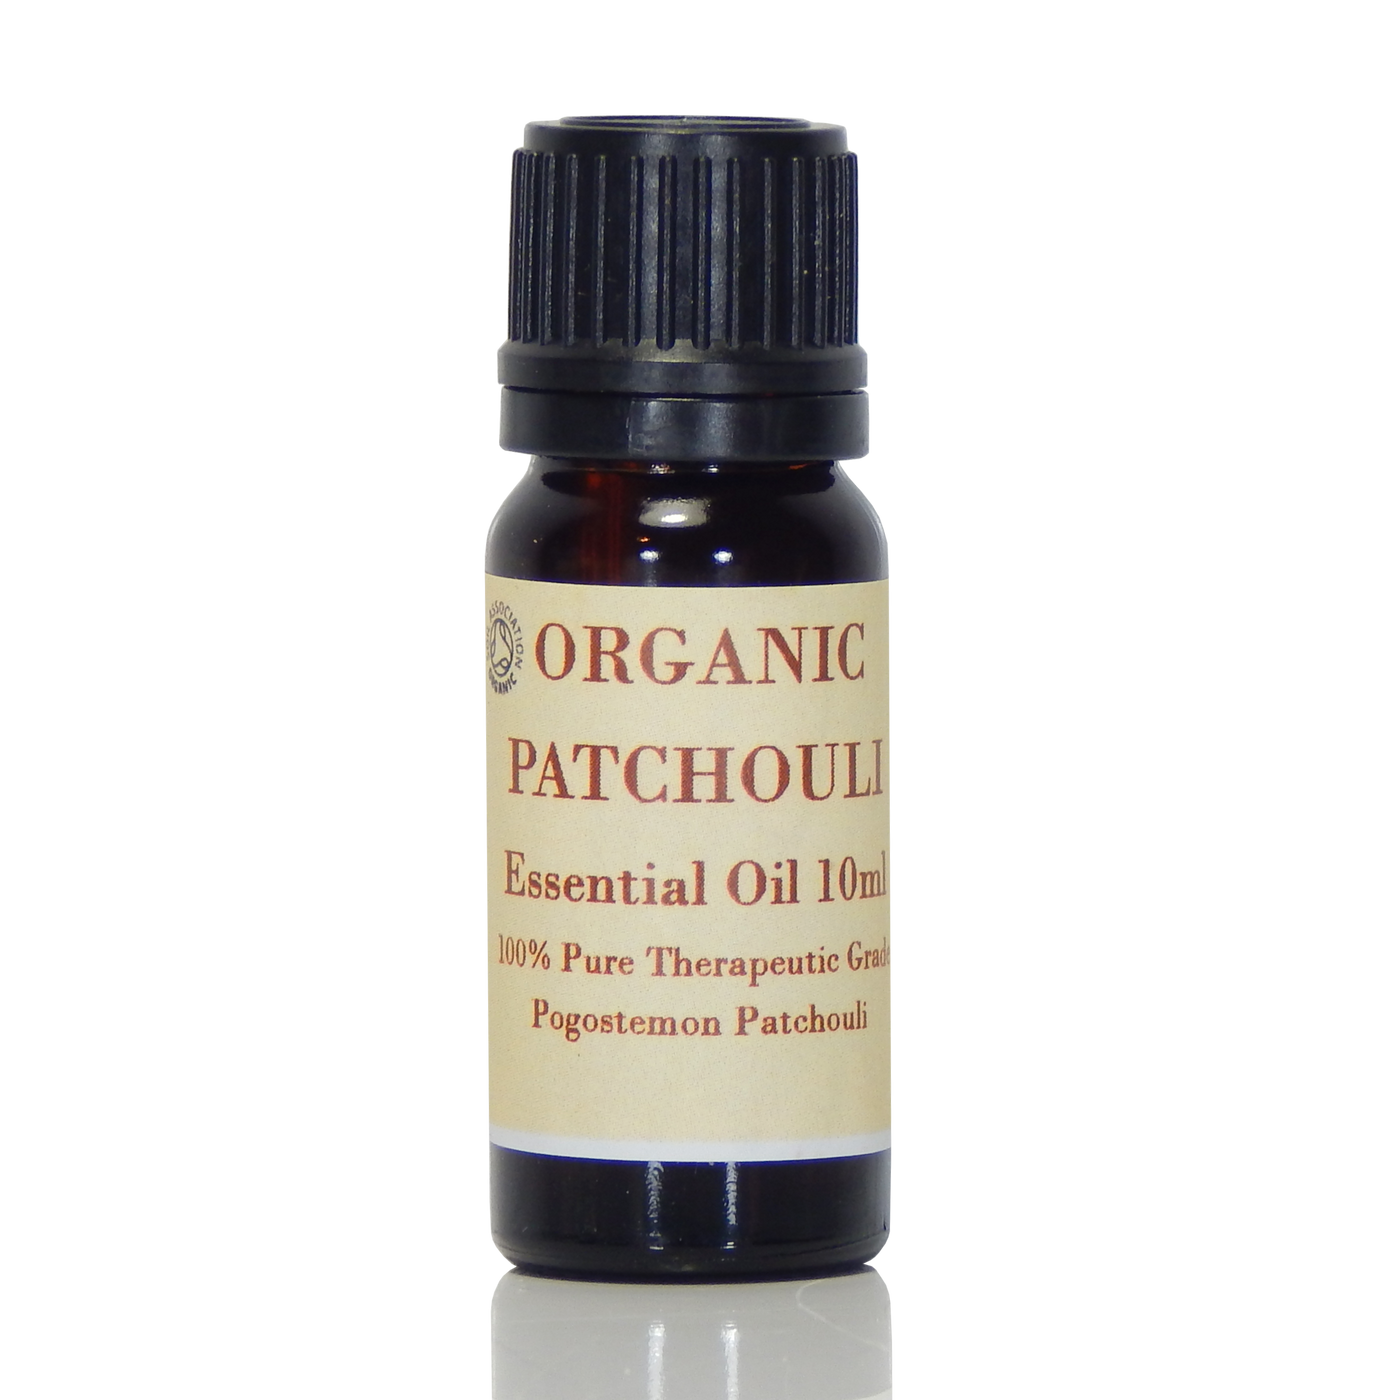 Patchouli Organic Essential Oil (Pogostemon Patchouli)